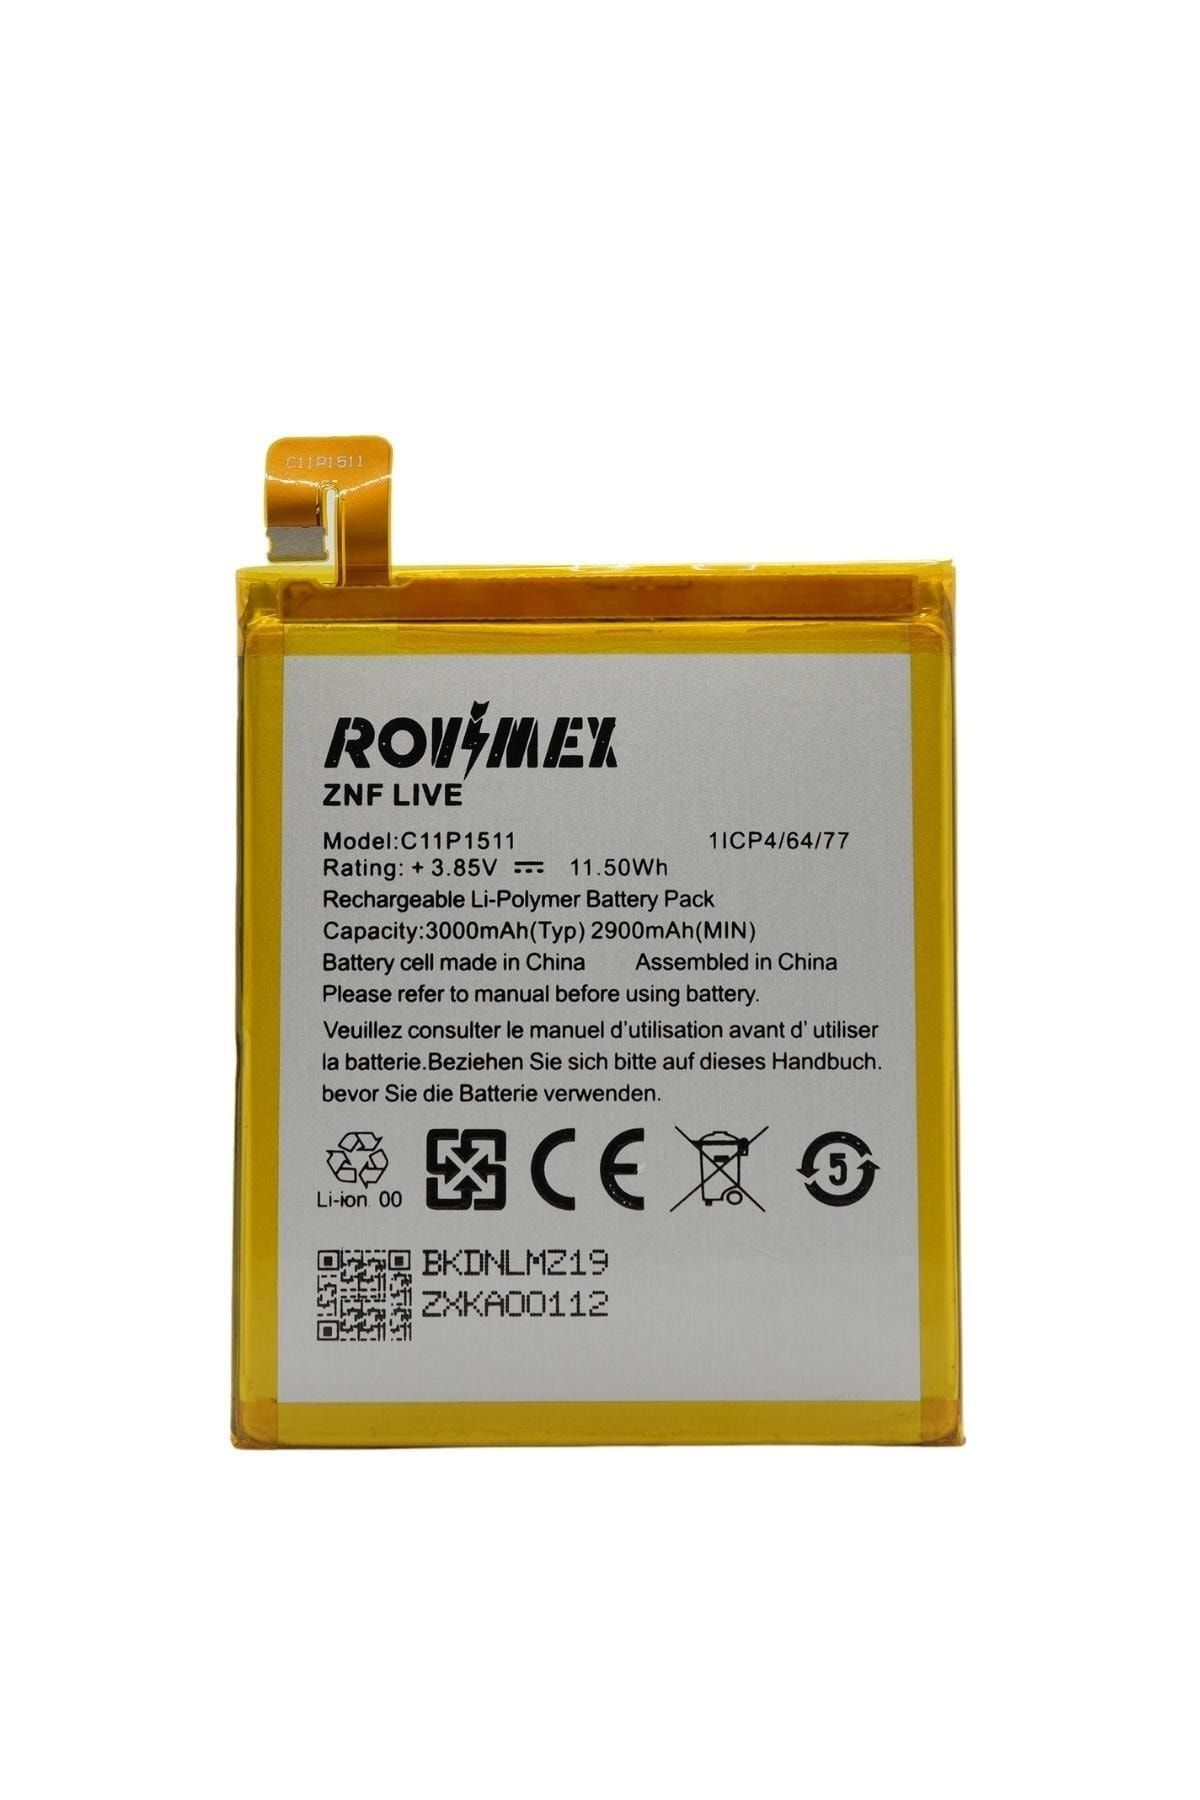 Rovimex Asus Zenfone Live (zb553kl) Batarya Pil